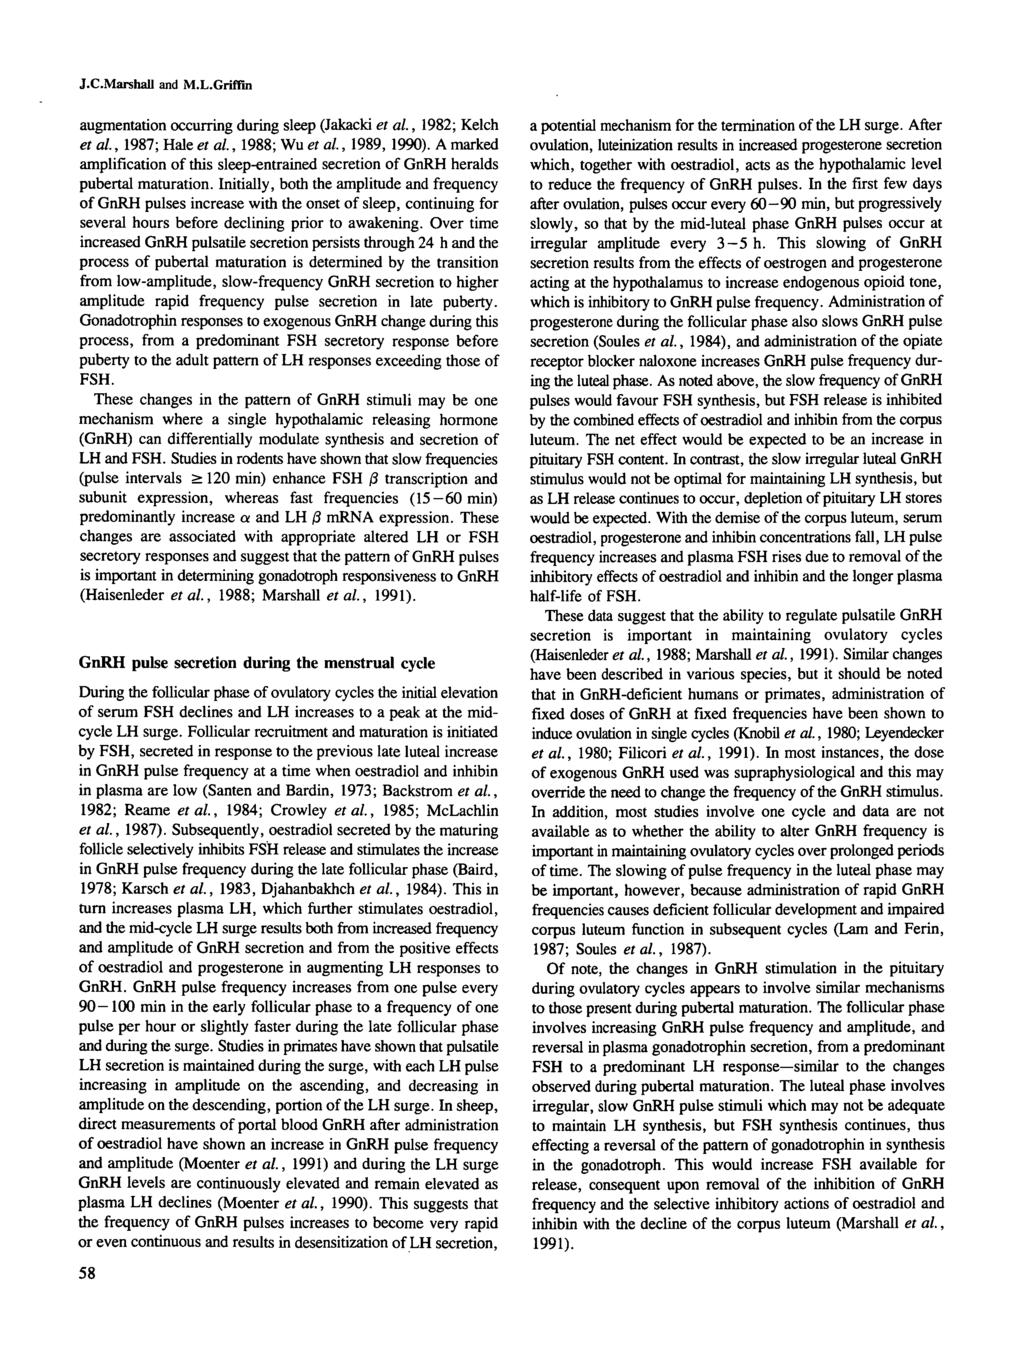 J.CMarshaU and M.L.Griffm augmentation occurring during sleep (Jakacki et al., 1982; Kelch et al., 1987; Hale et al., 1988; Wu et al., 1989, 1990).